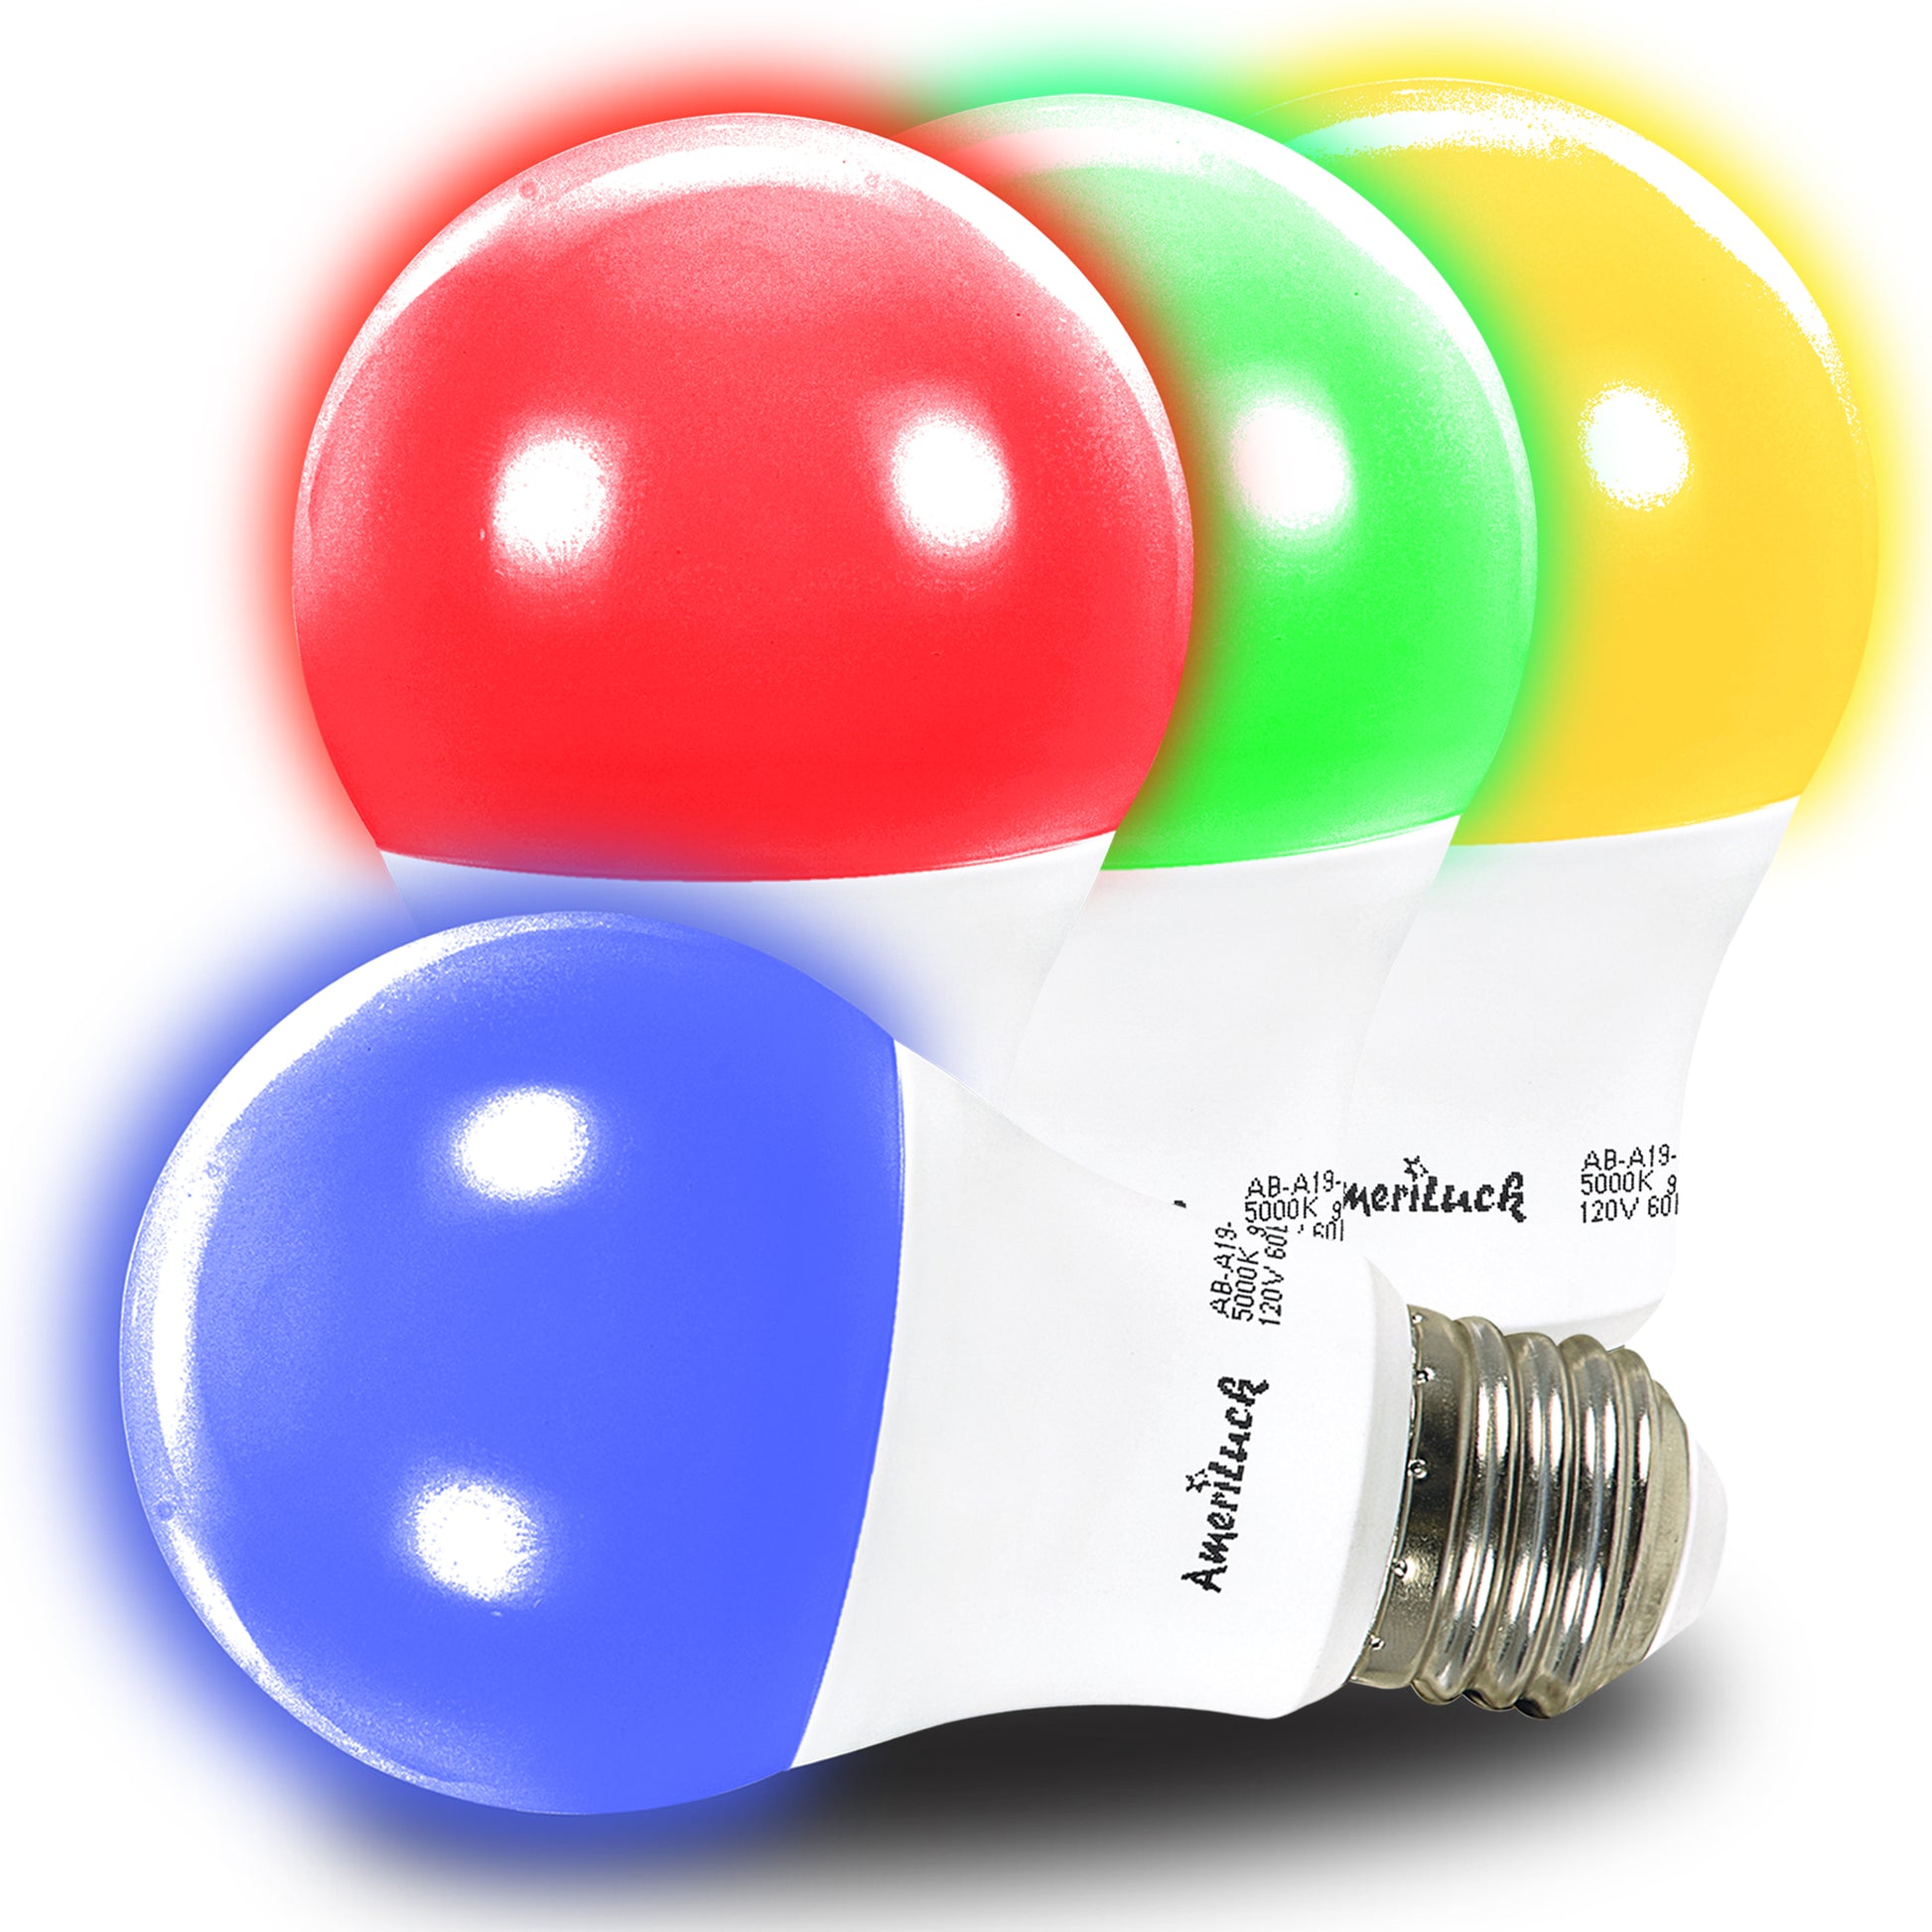 Buy Kolors B22 LED Bulb 20W Cool Daylight (6500-7500K), PACK OF 4